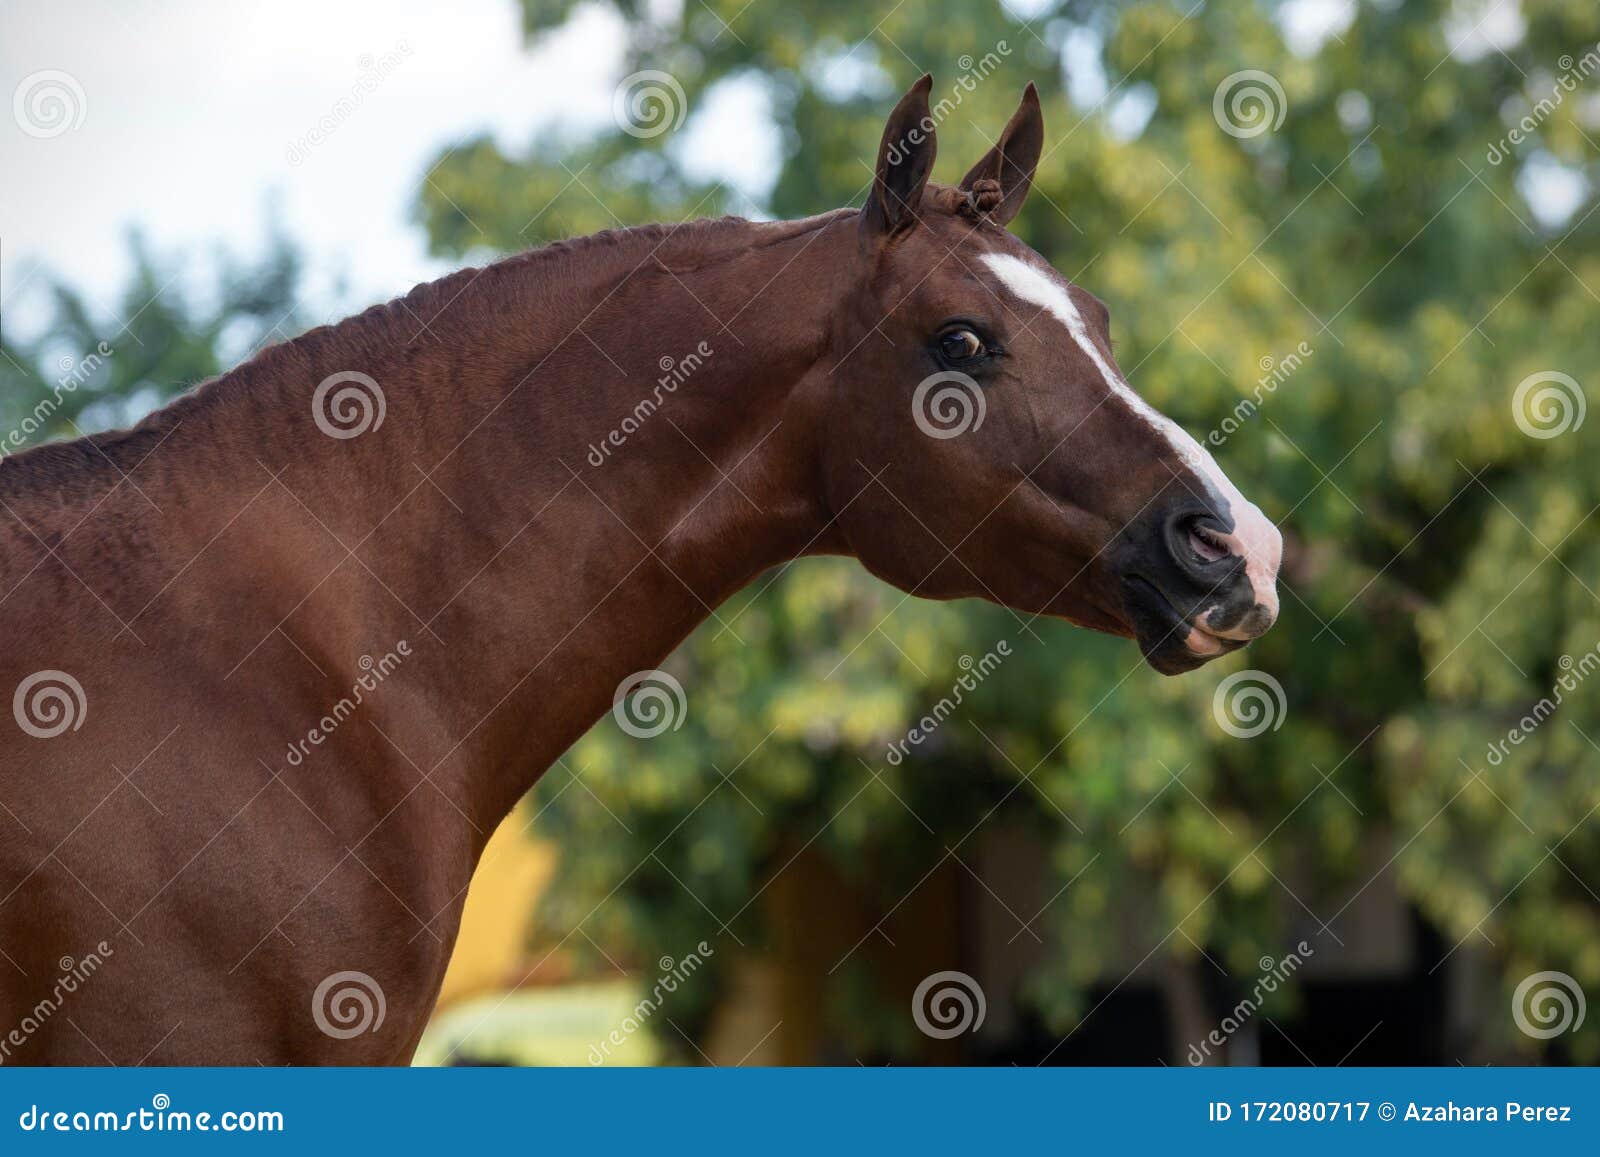 beautiful portrait of a chestnut arabian stallion